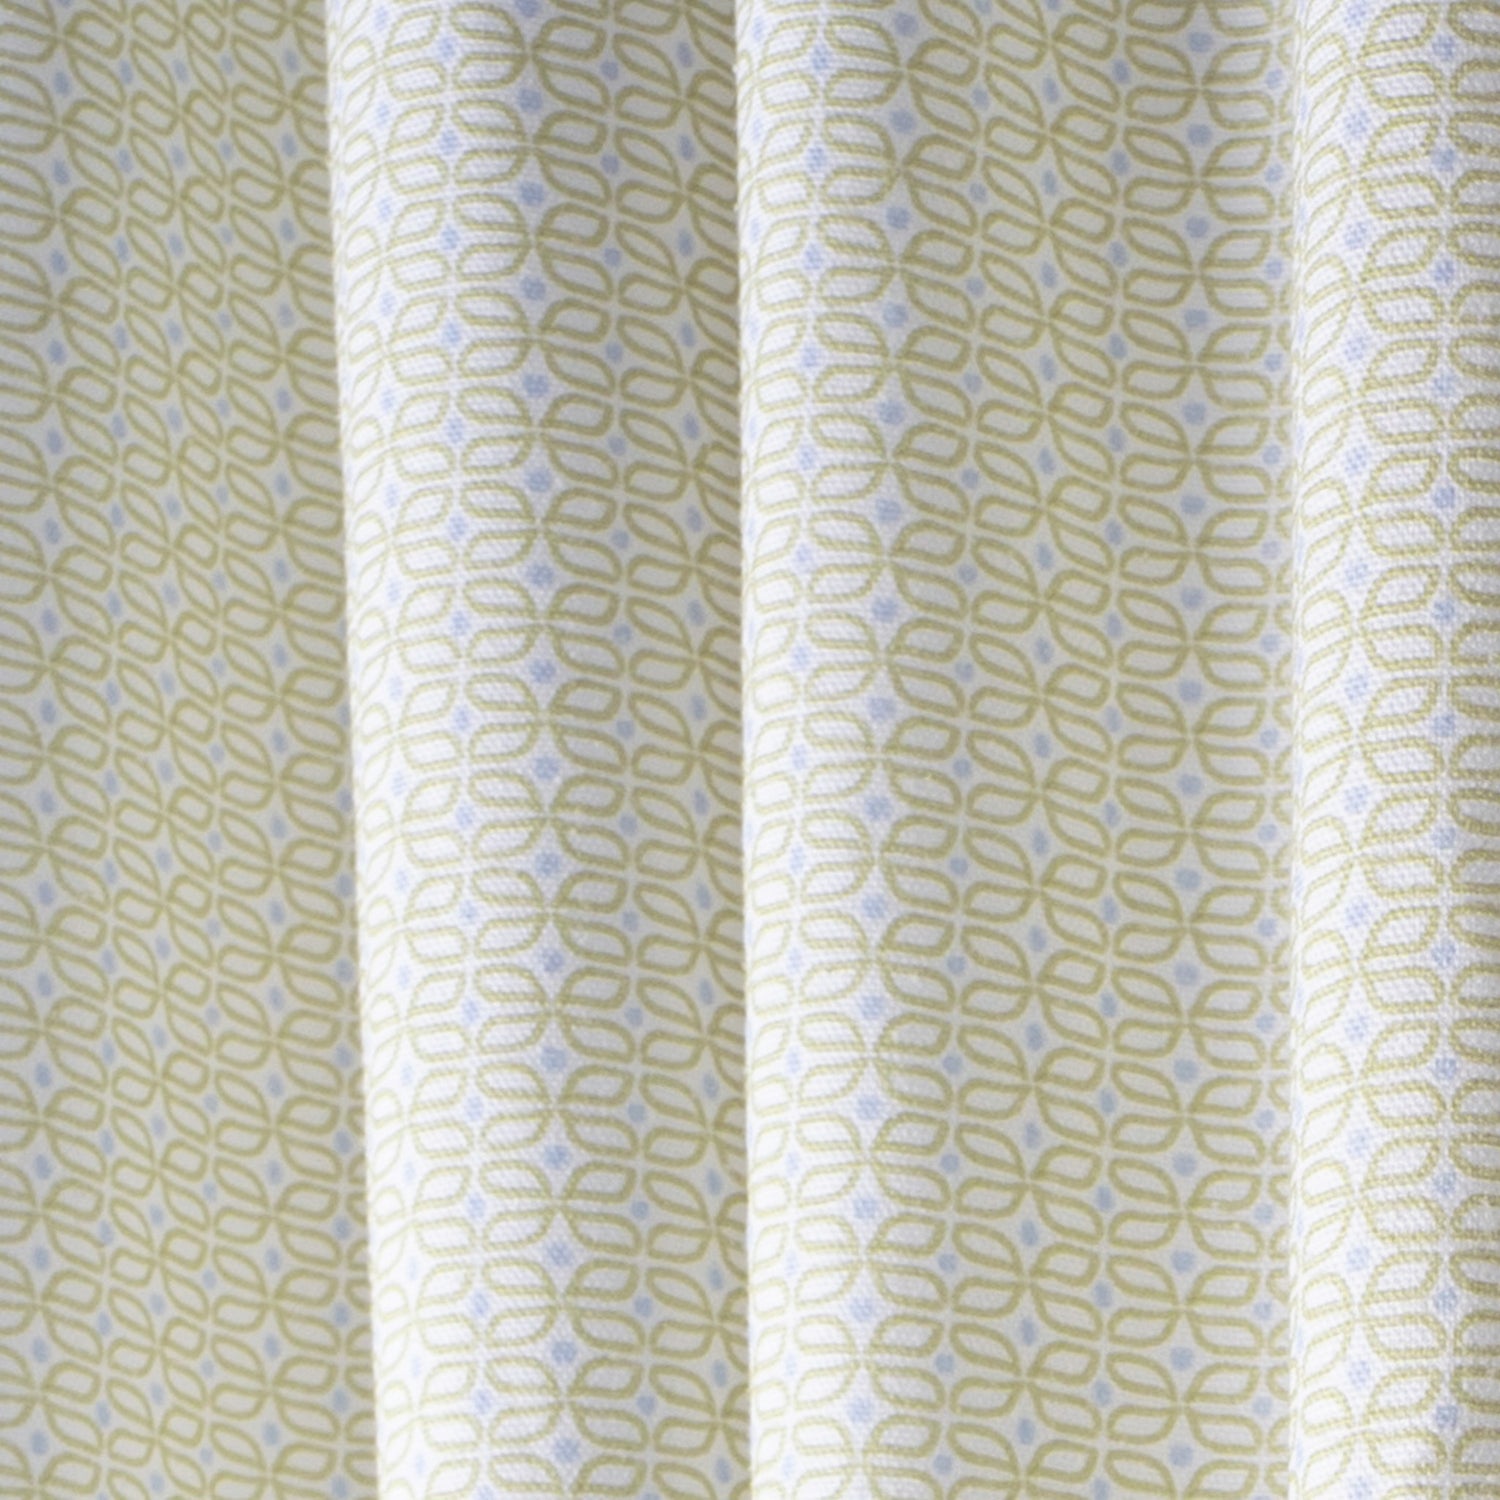 Moss Green Geometric Printed Curtain Close-Up